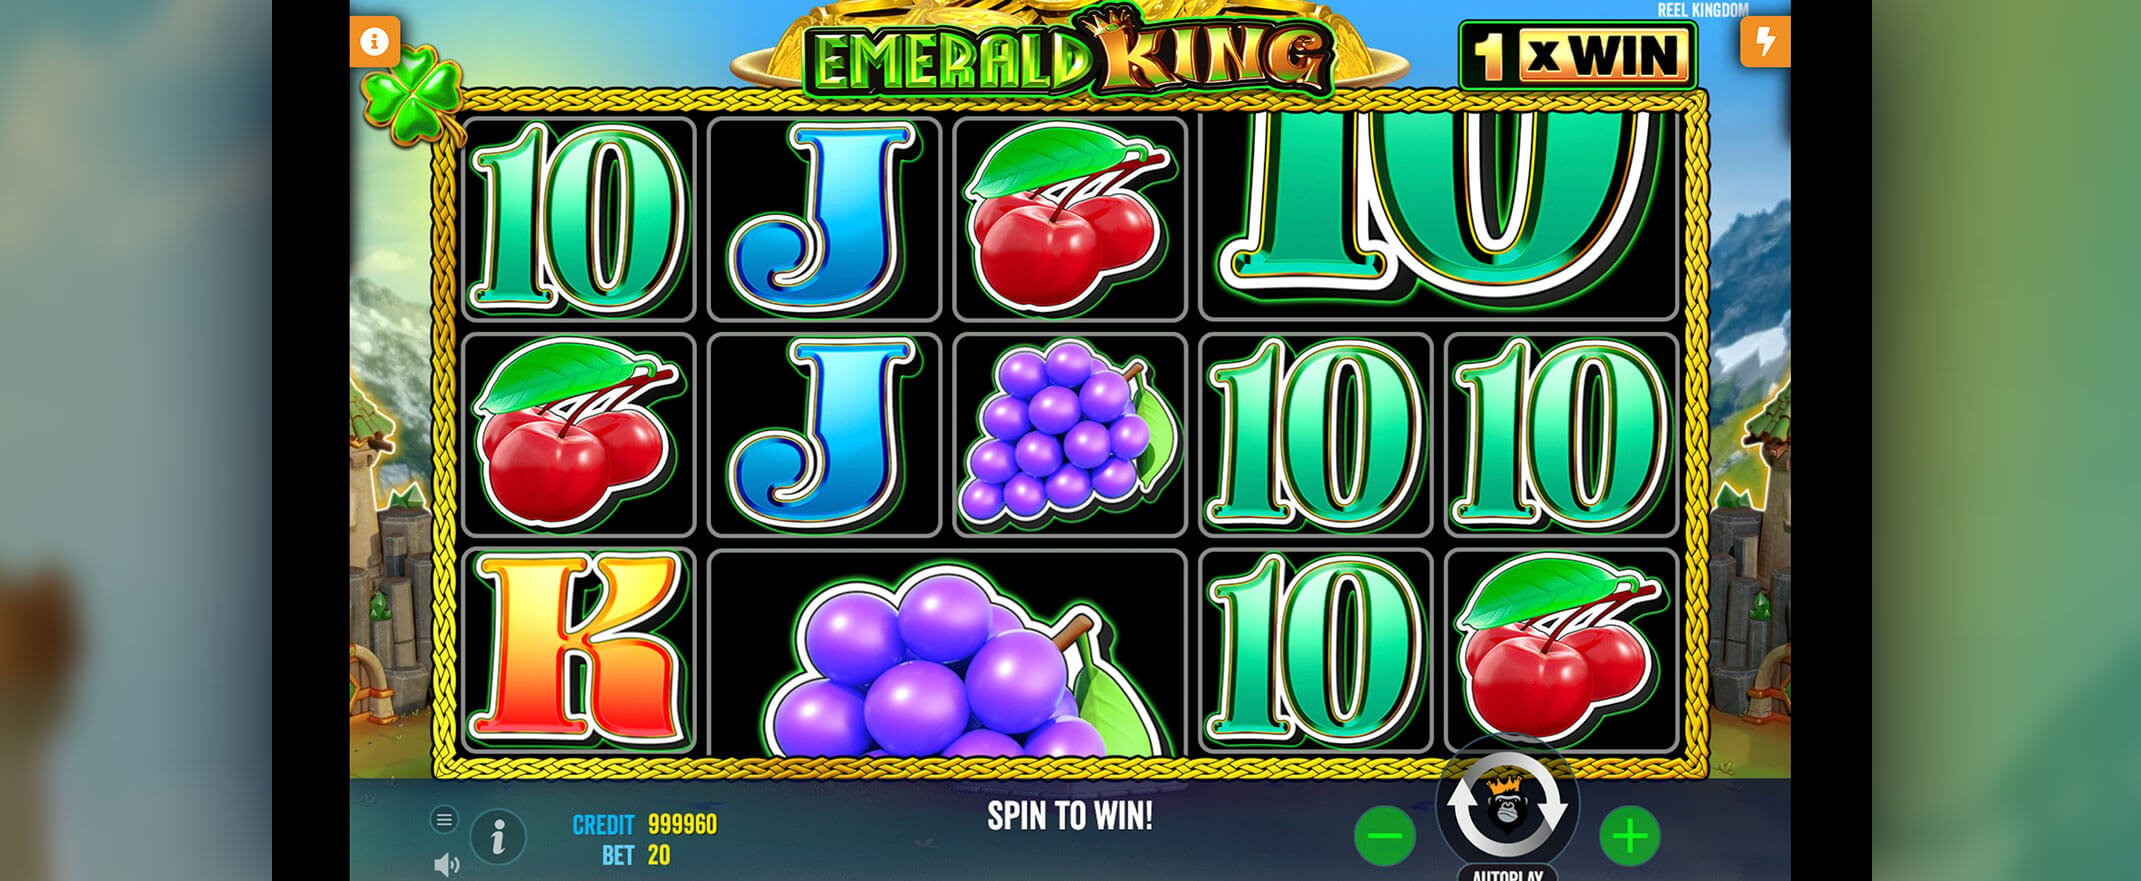 Emerald King slot screenshot